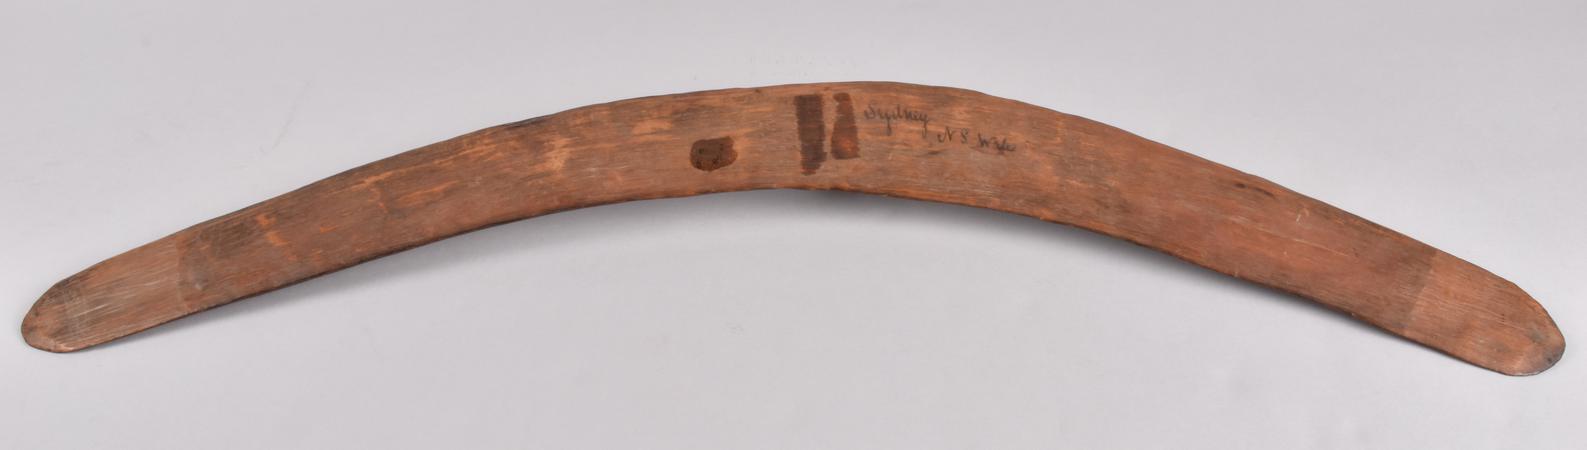 traditional aboriginal boomerangs